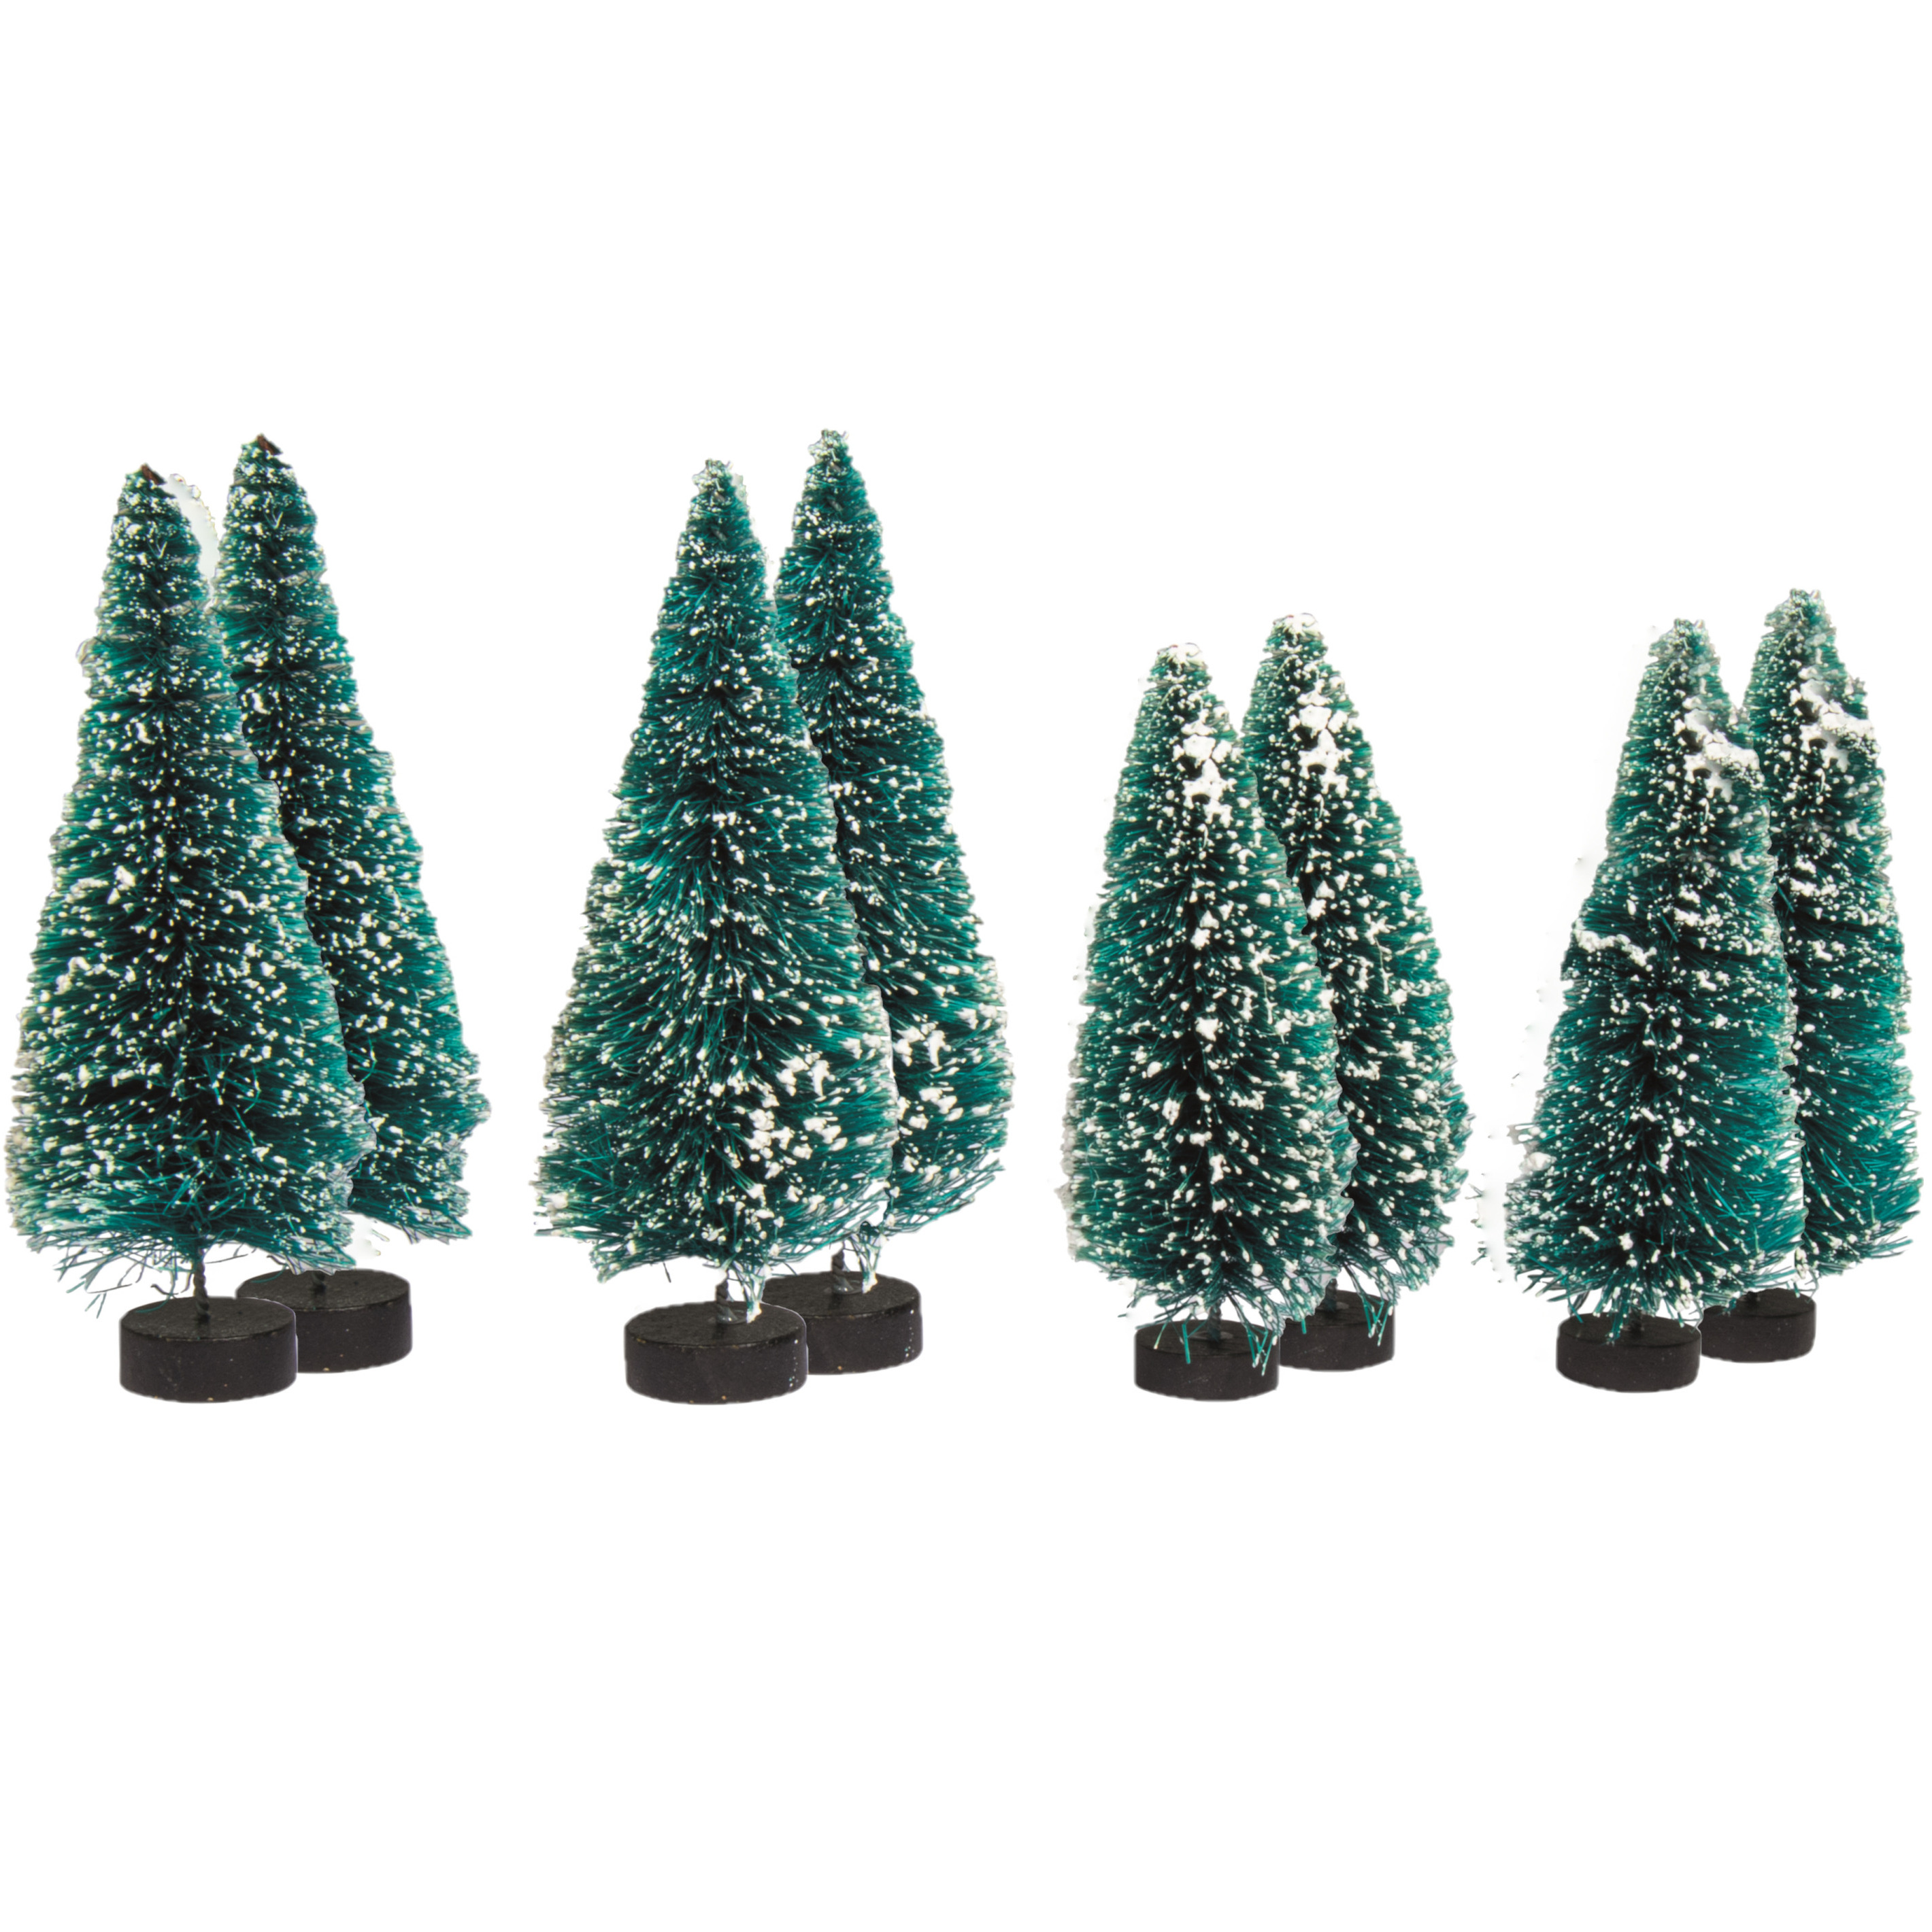 Rayher hobby kerstdorp miniatuur boompjes 8x stuks 9 en 12 cm